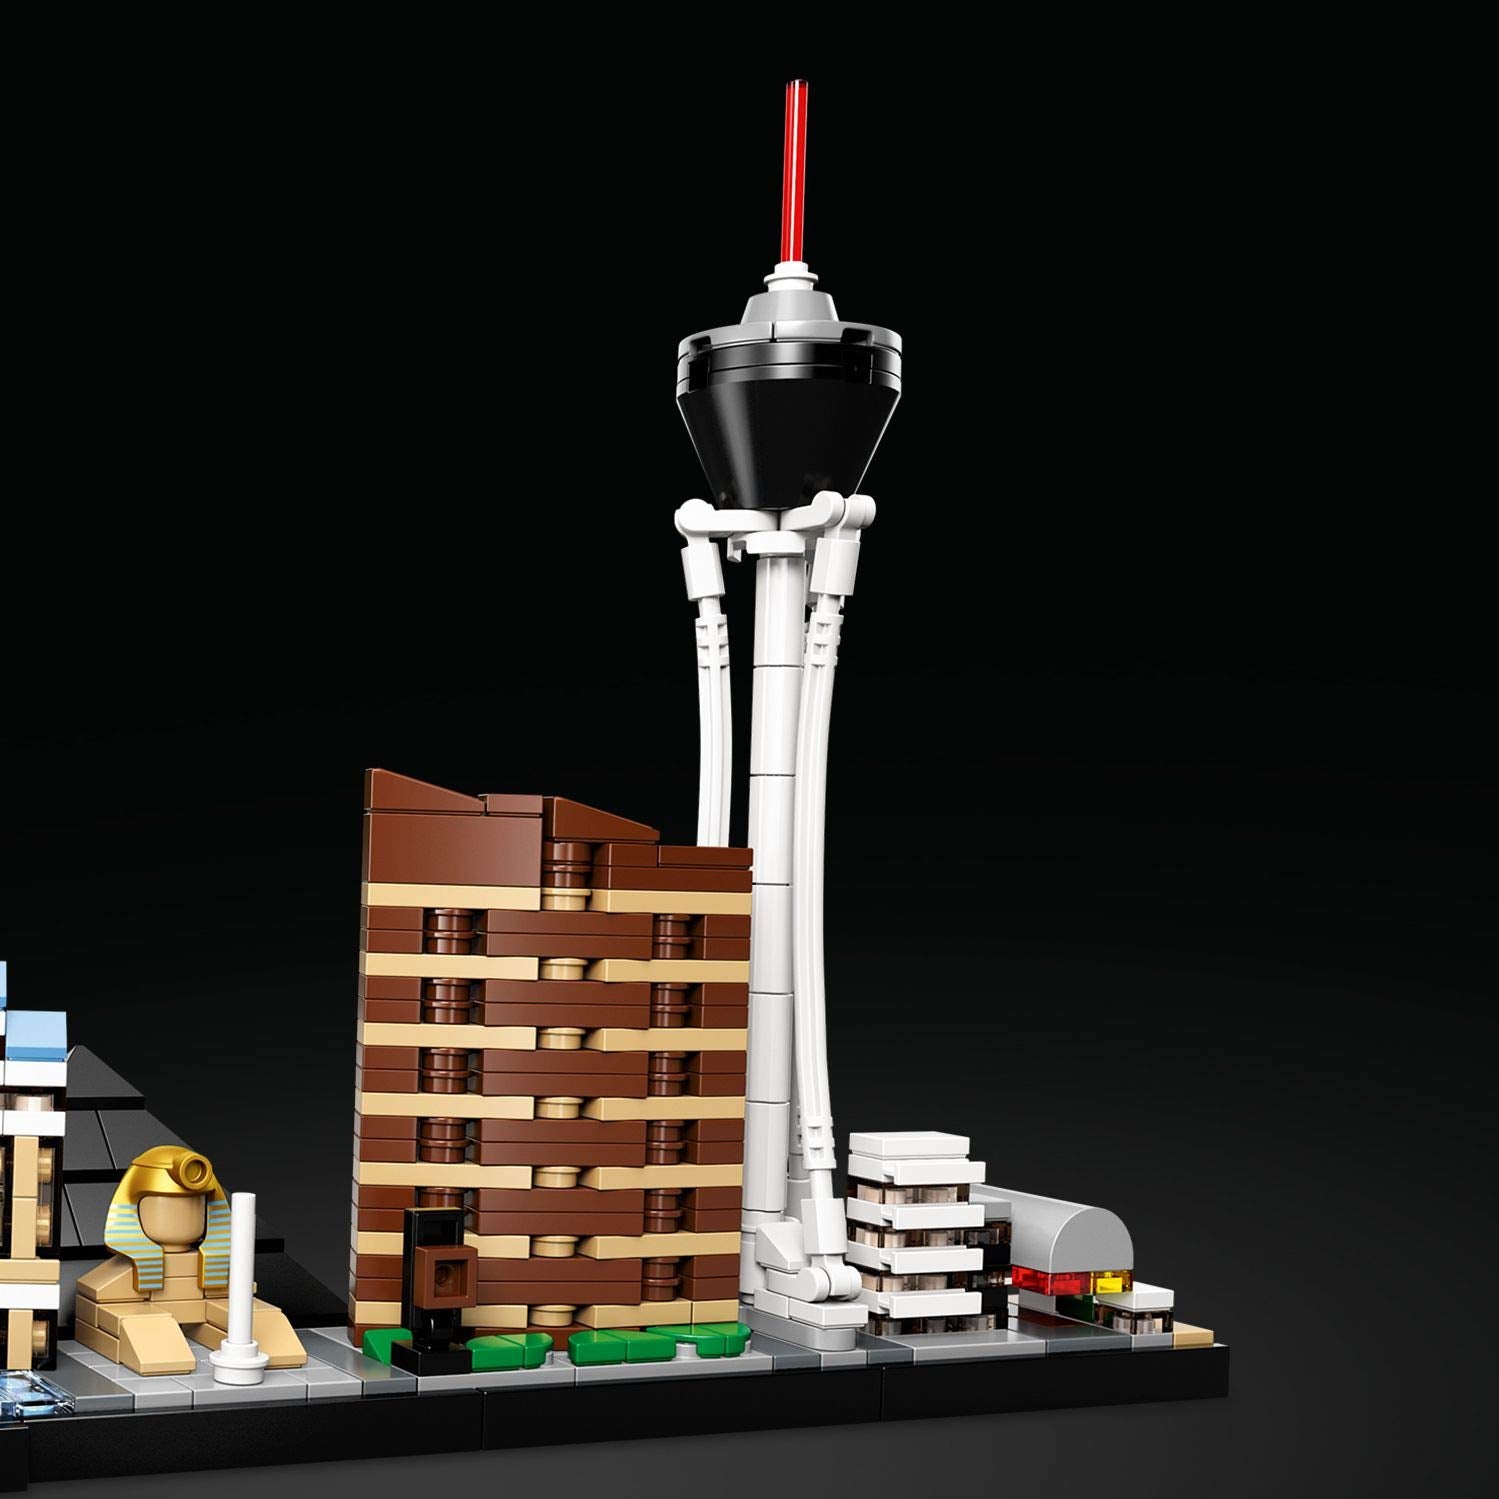 LEGO 21047 Architecture Las Vegas (Like New, Open Box)